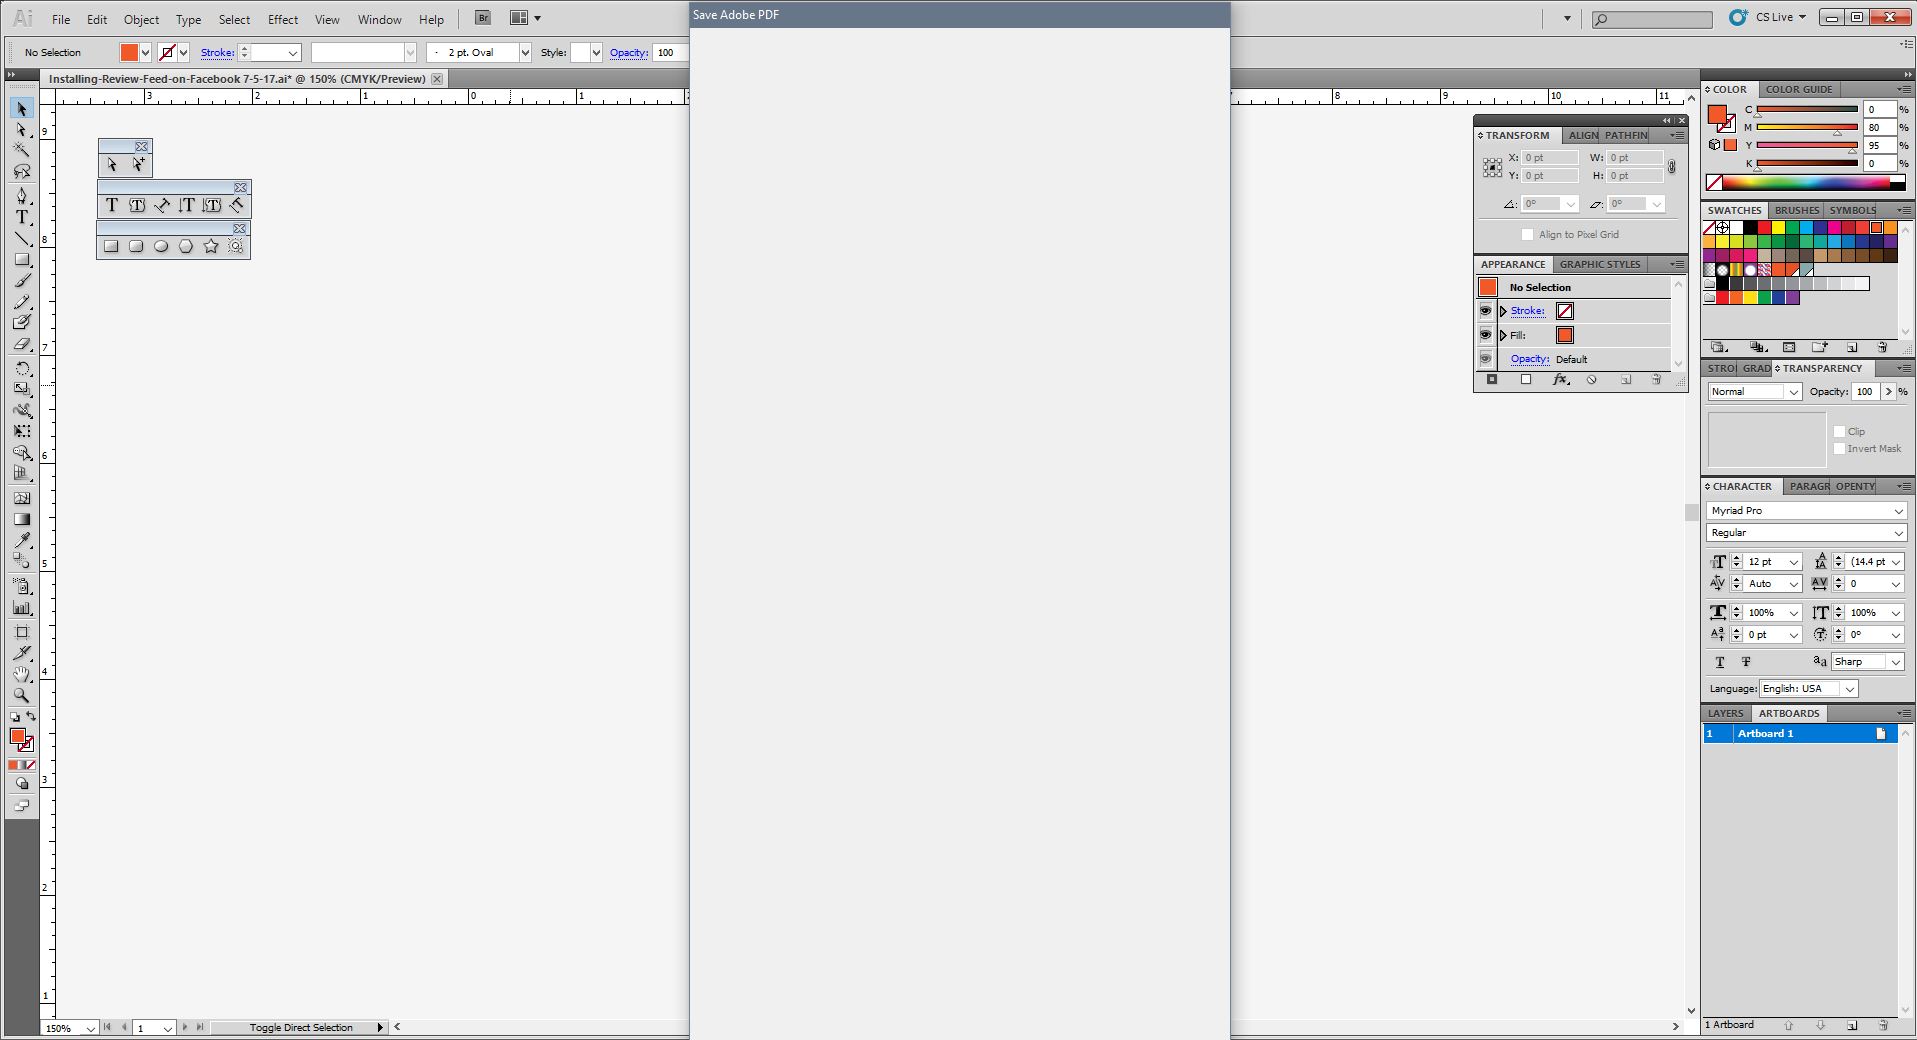 Adobe Illustrator CS5: Windows are blank. Unable t - Adobe Support